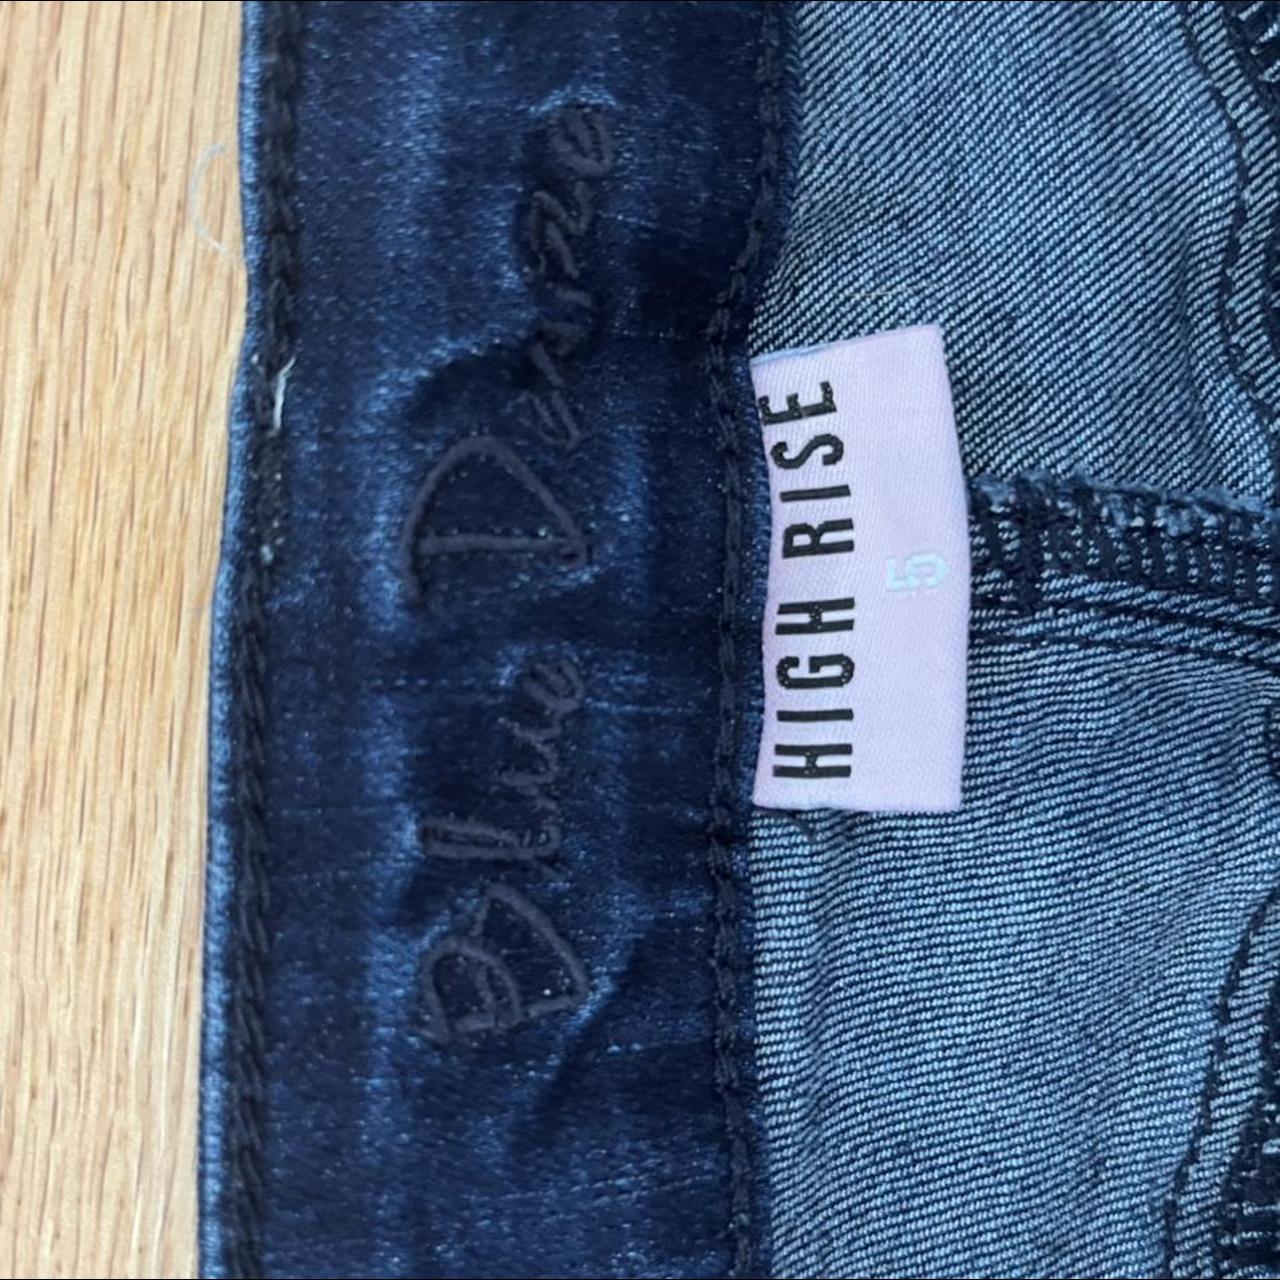 Product Image 2 - Blue Desire denim jeans
HIGH RISE